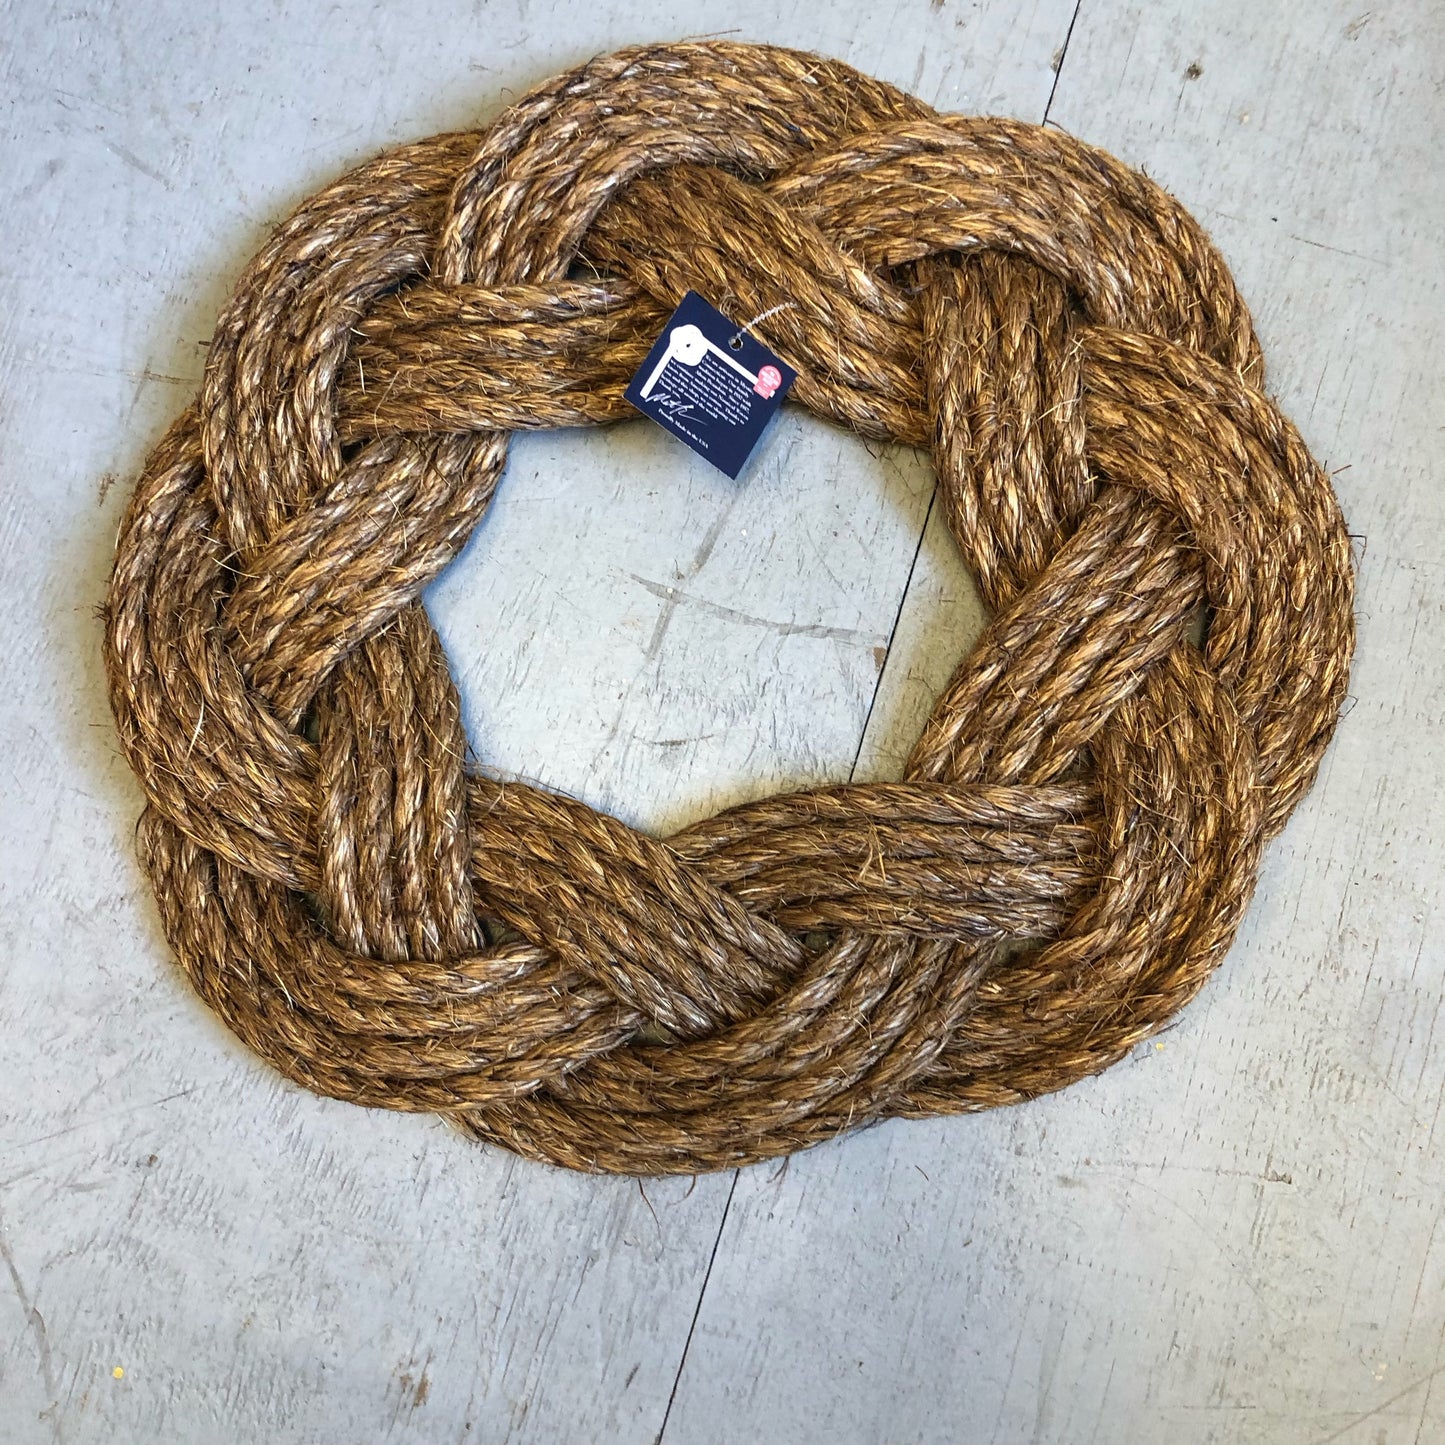 Nautical Wreath-Sailor knot